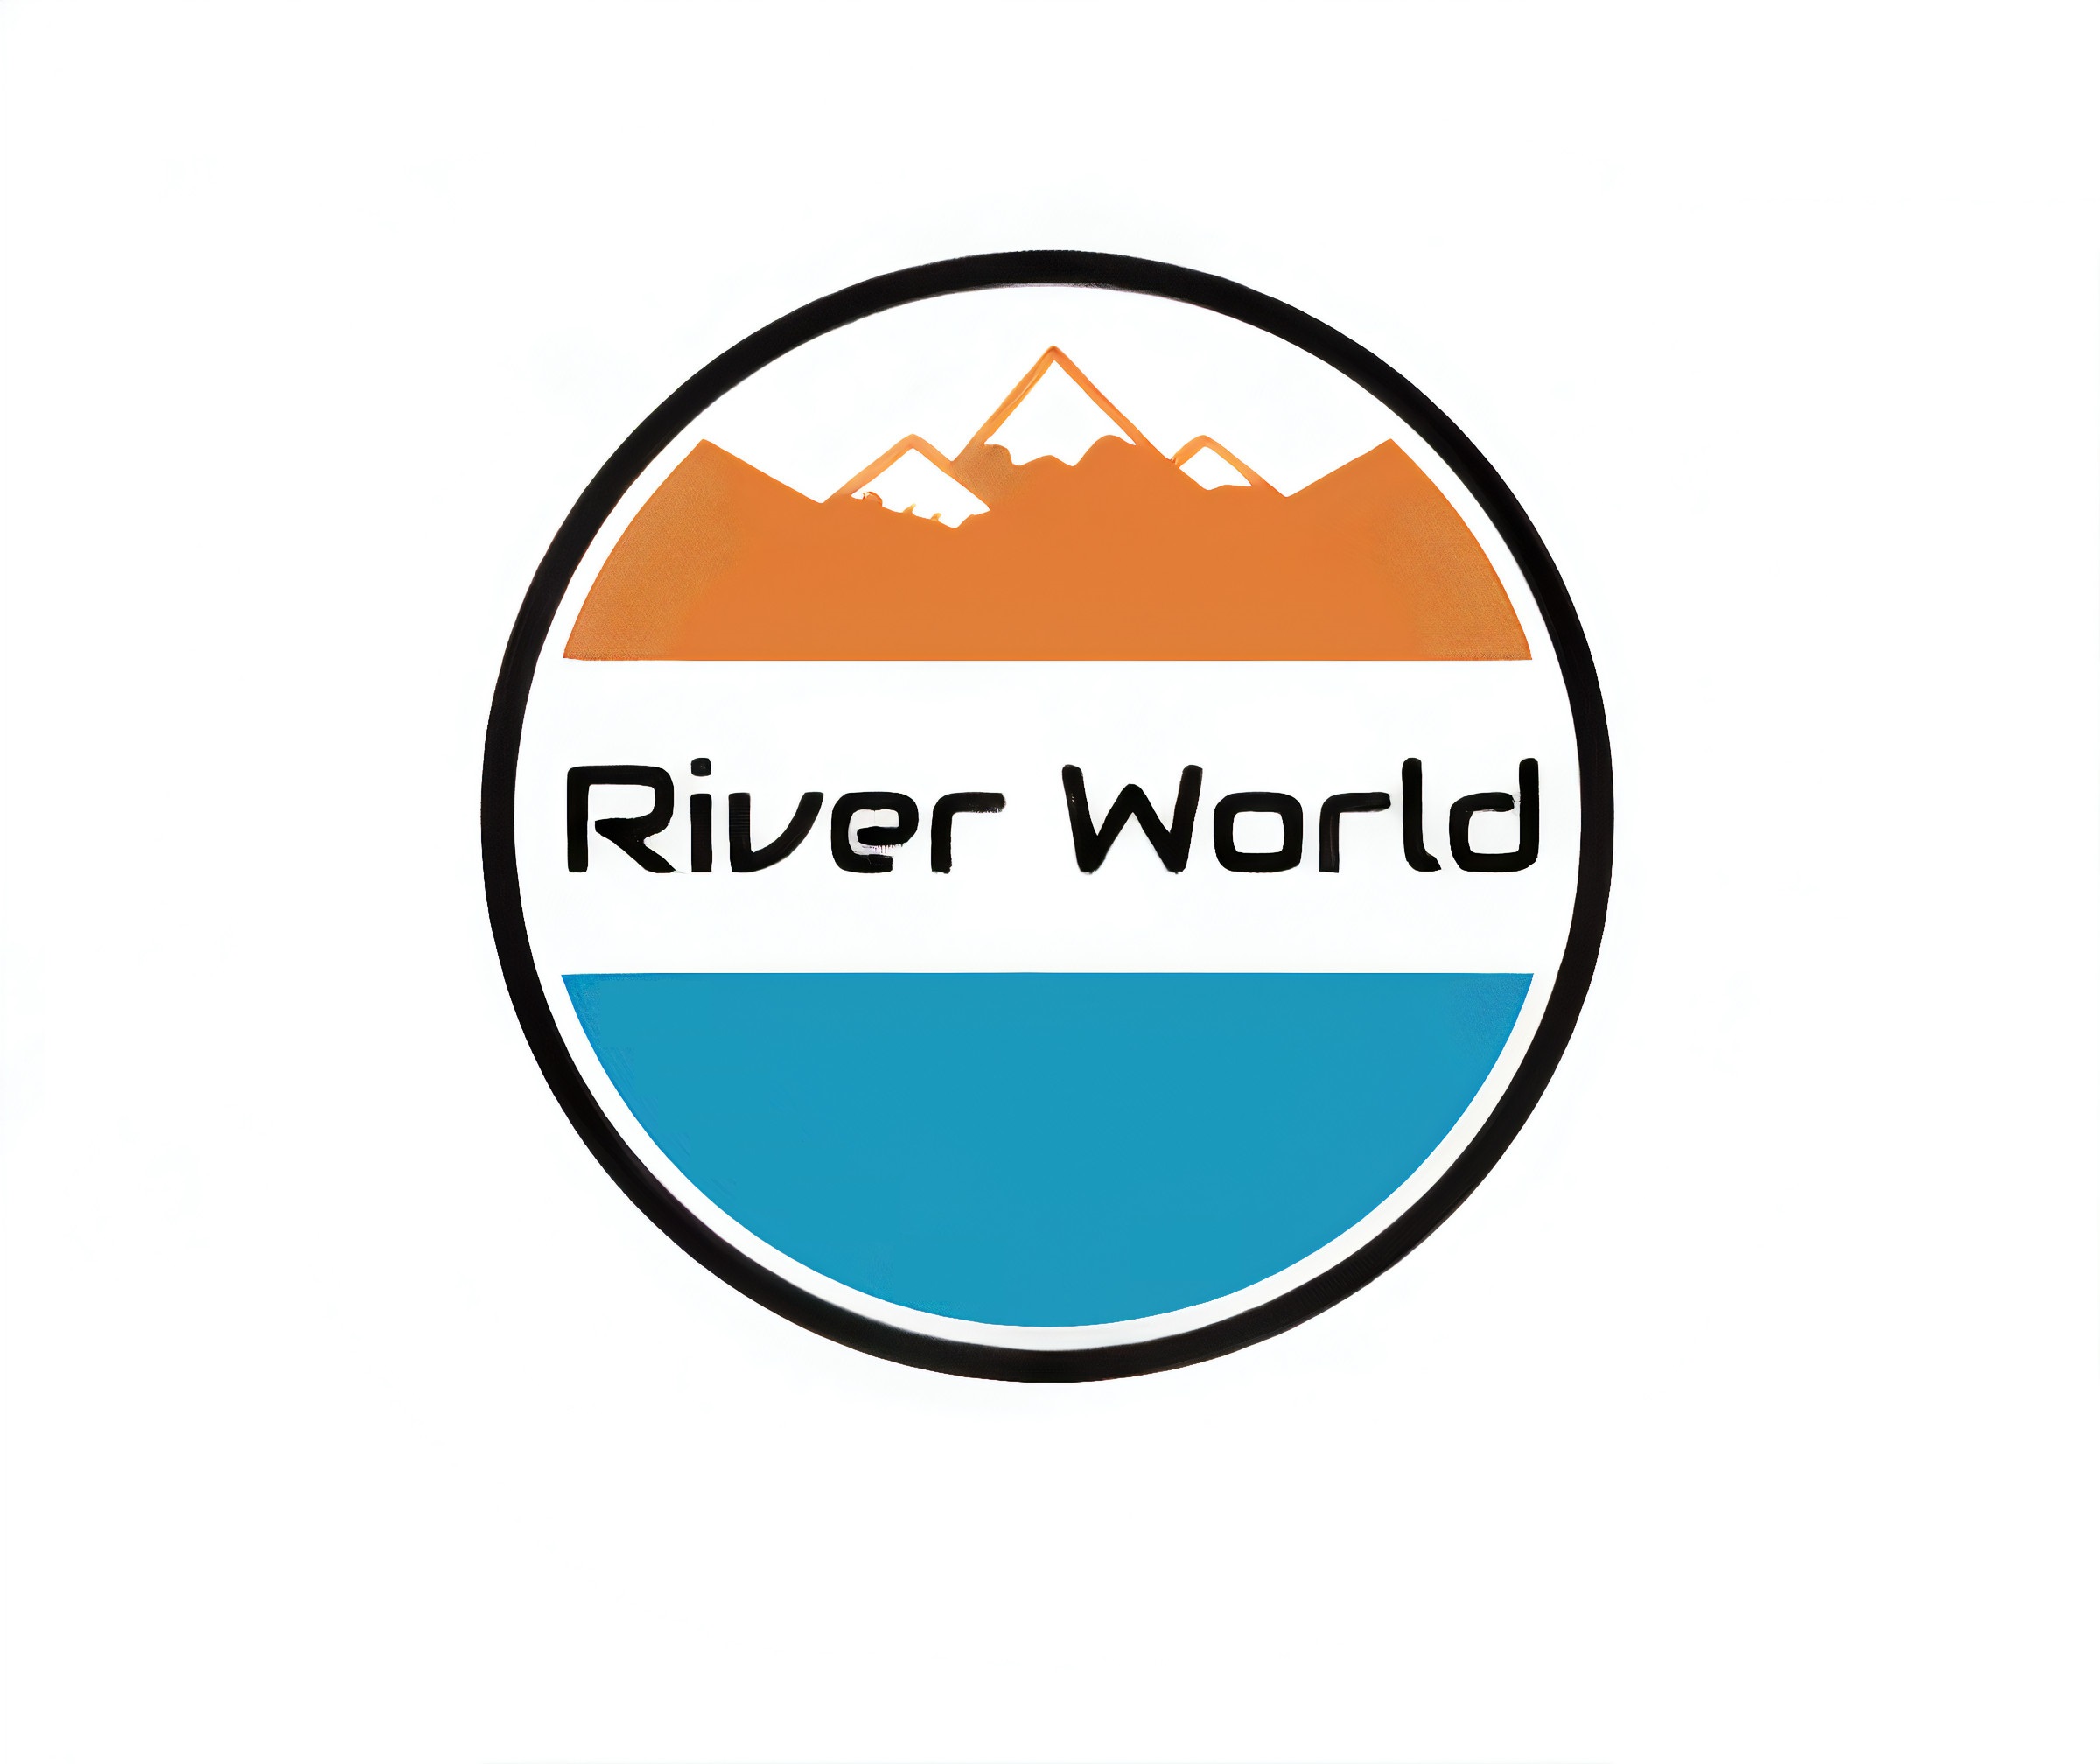 RiverWorld